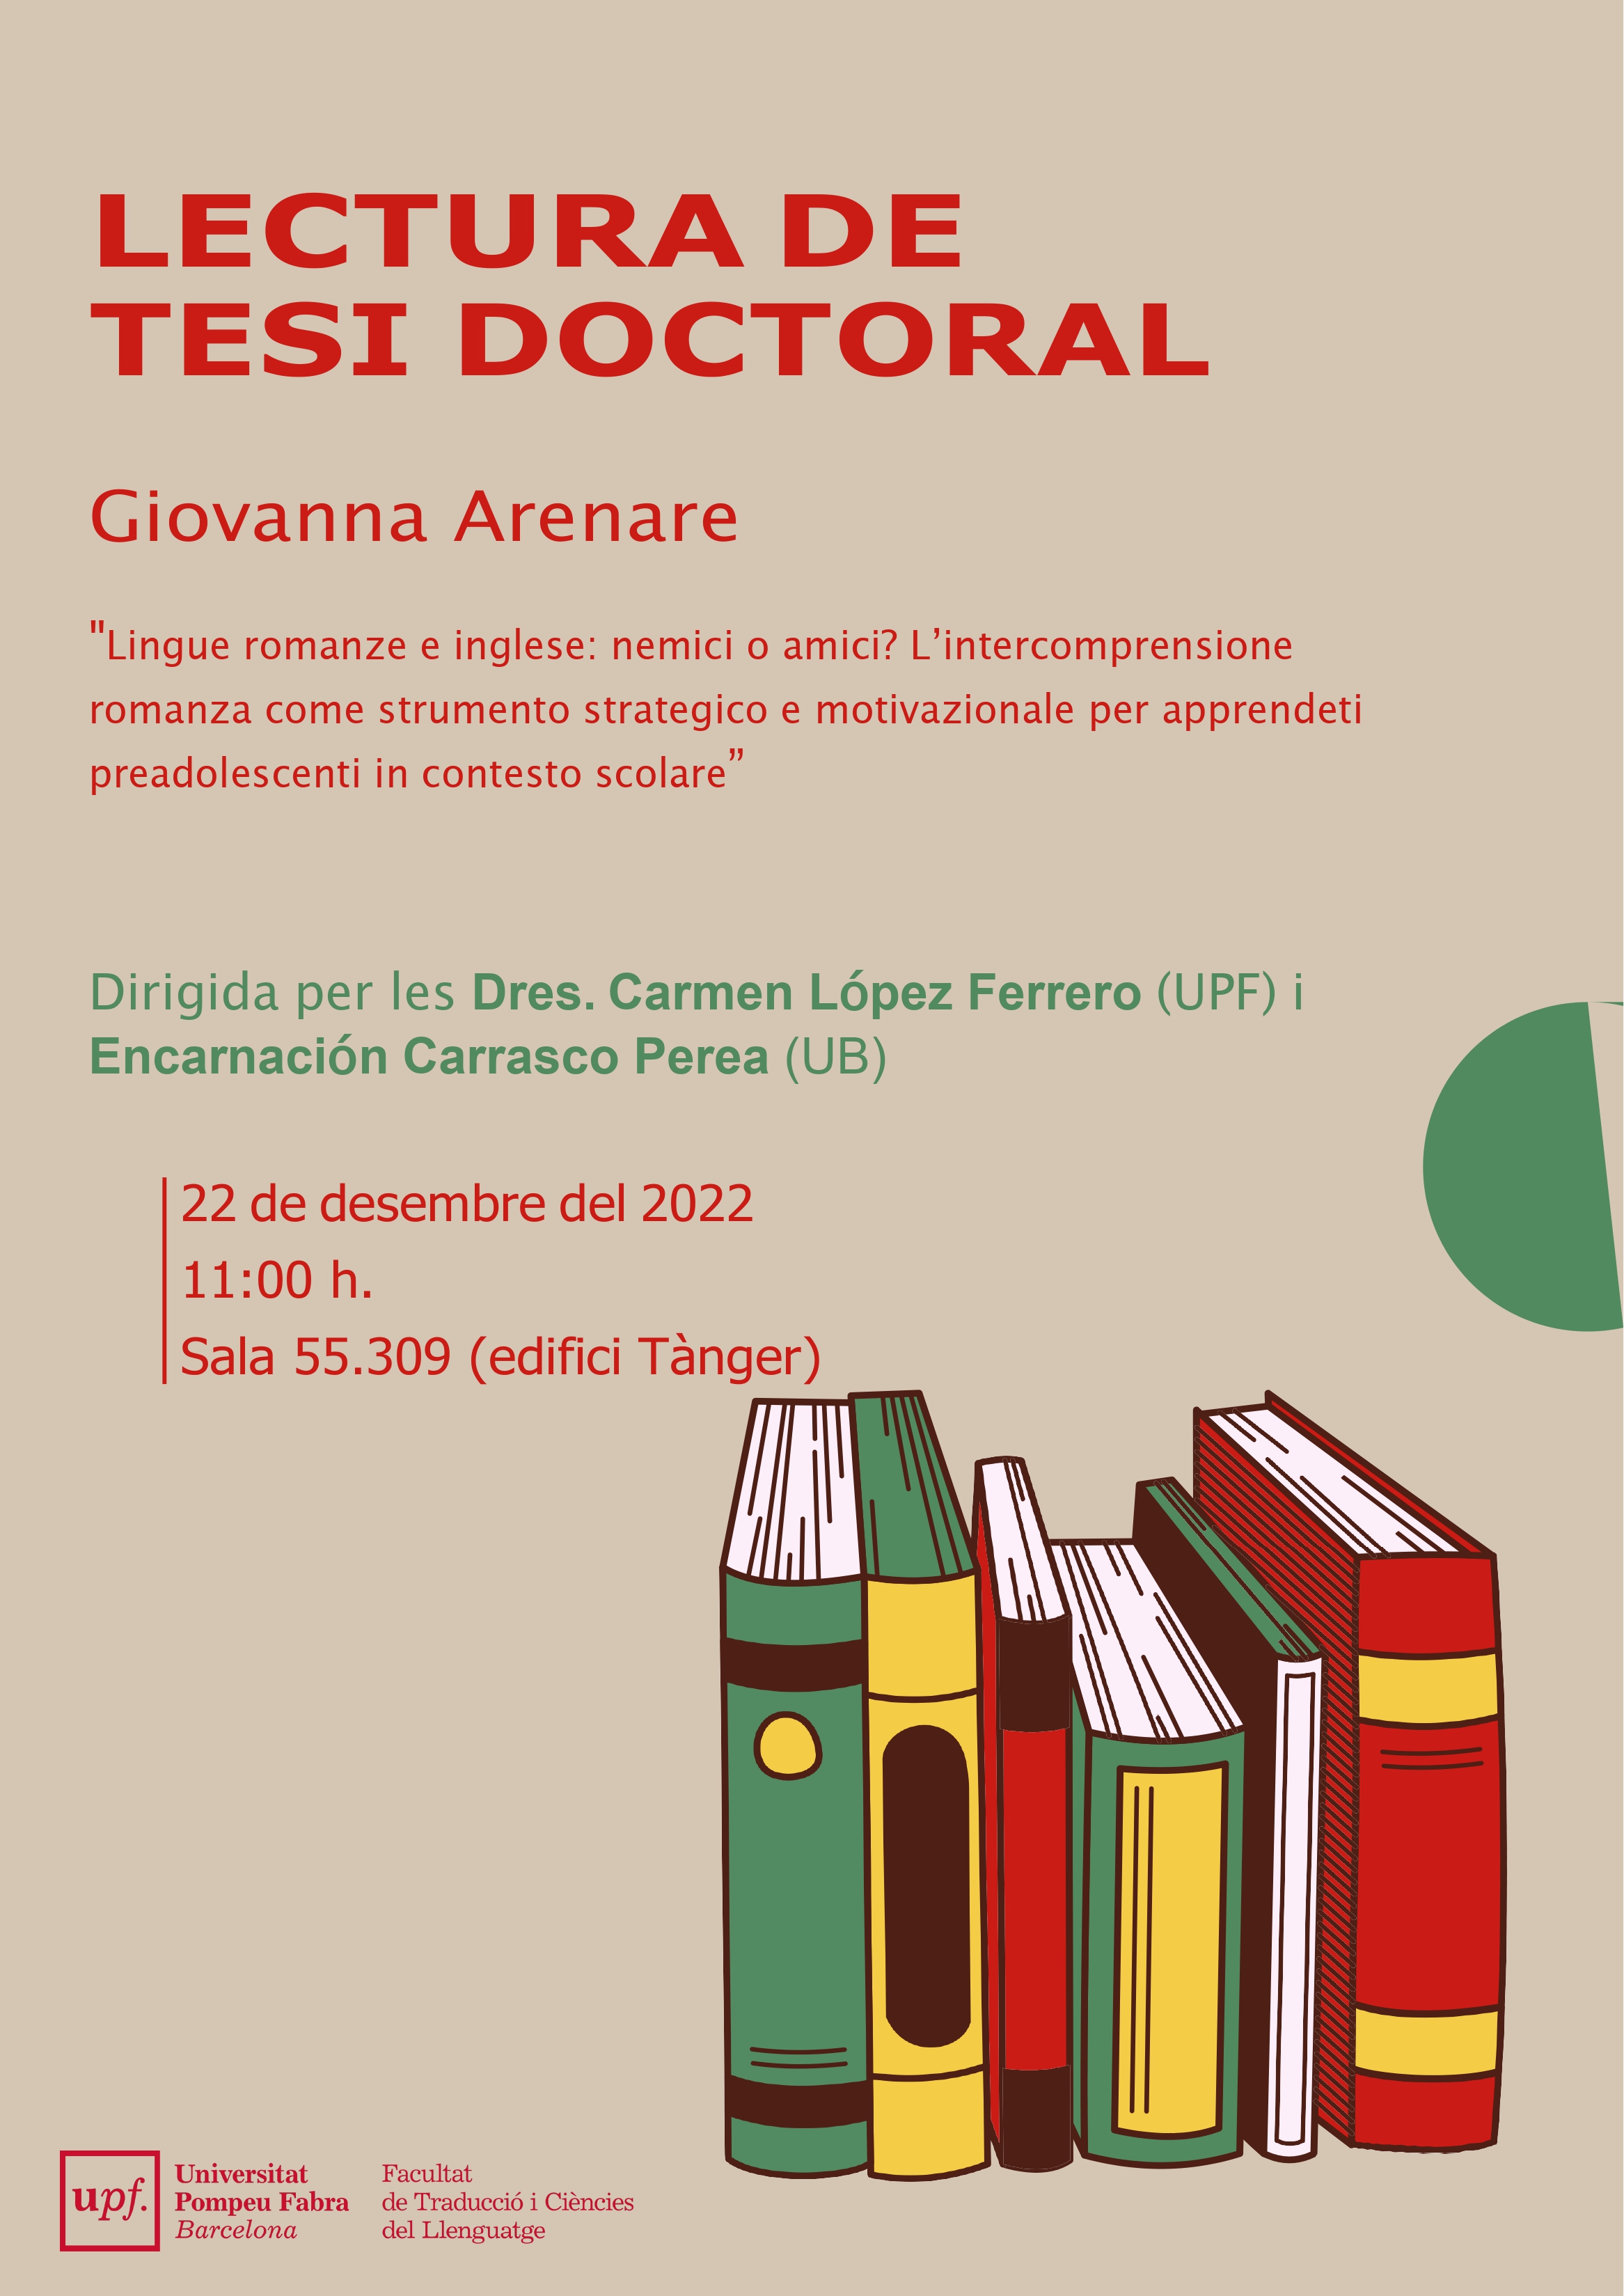 22/12/2022 Lectura de la tesi doctoral de Giovanna Arenare, a les 11.00 hores